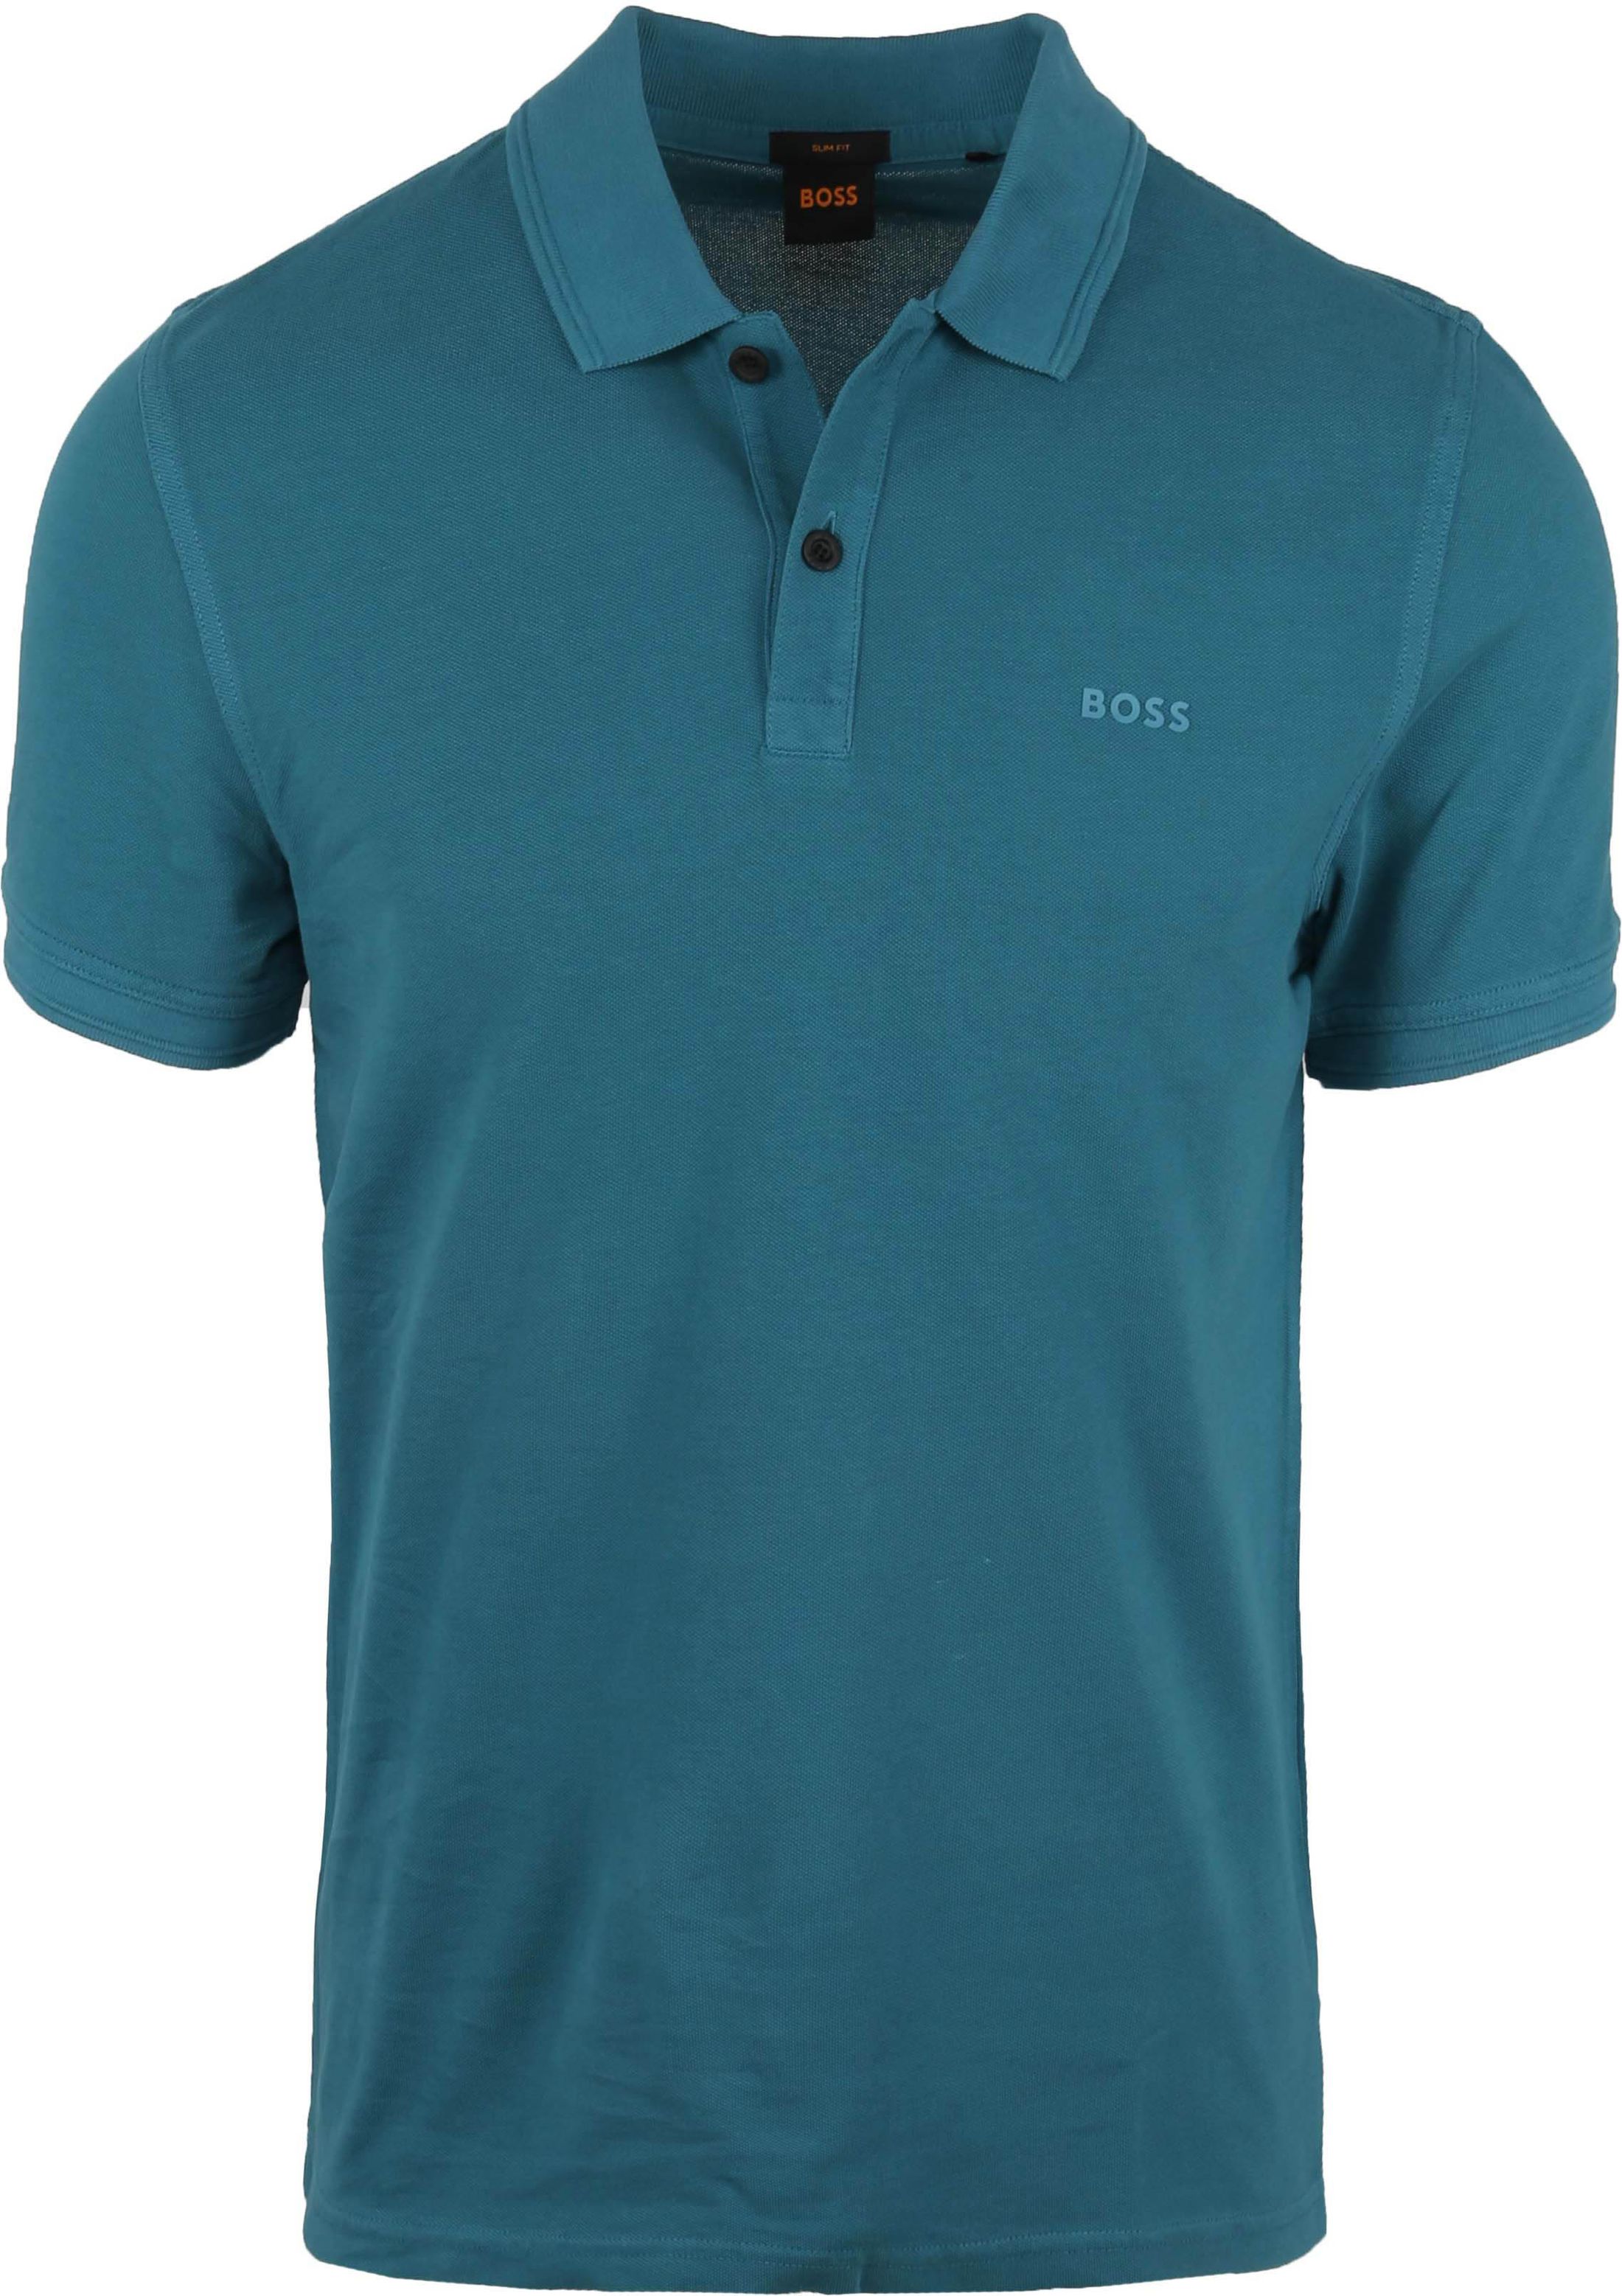 Hugo Boss Polo Shirt Green size M